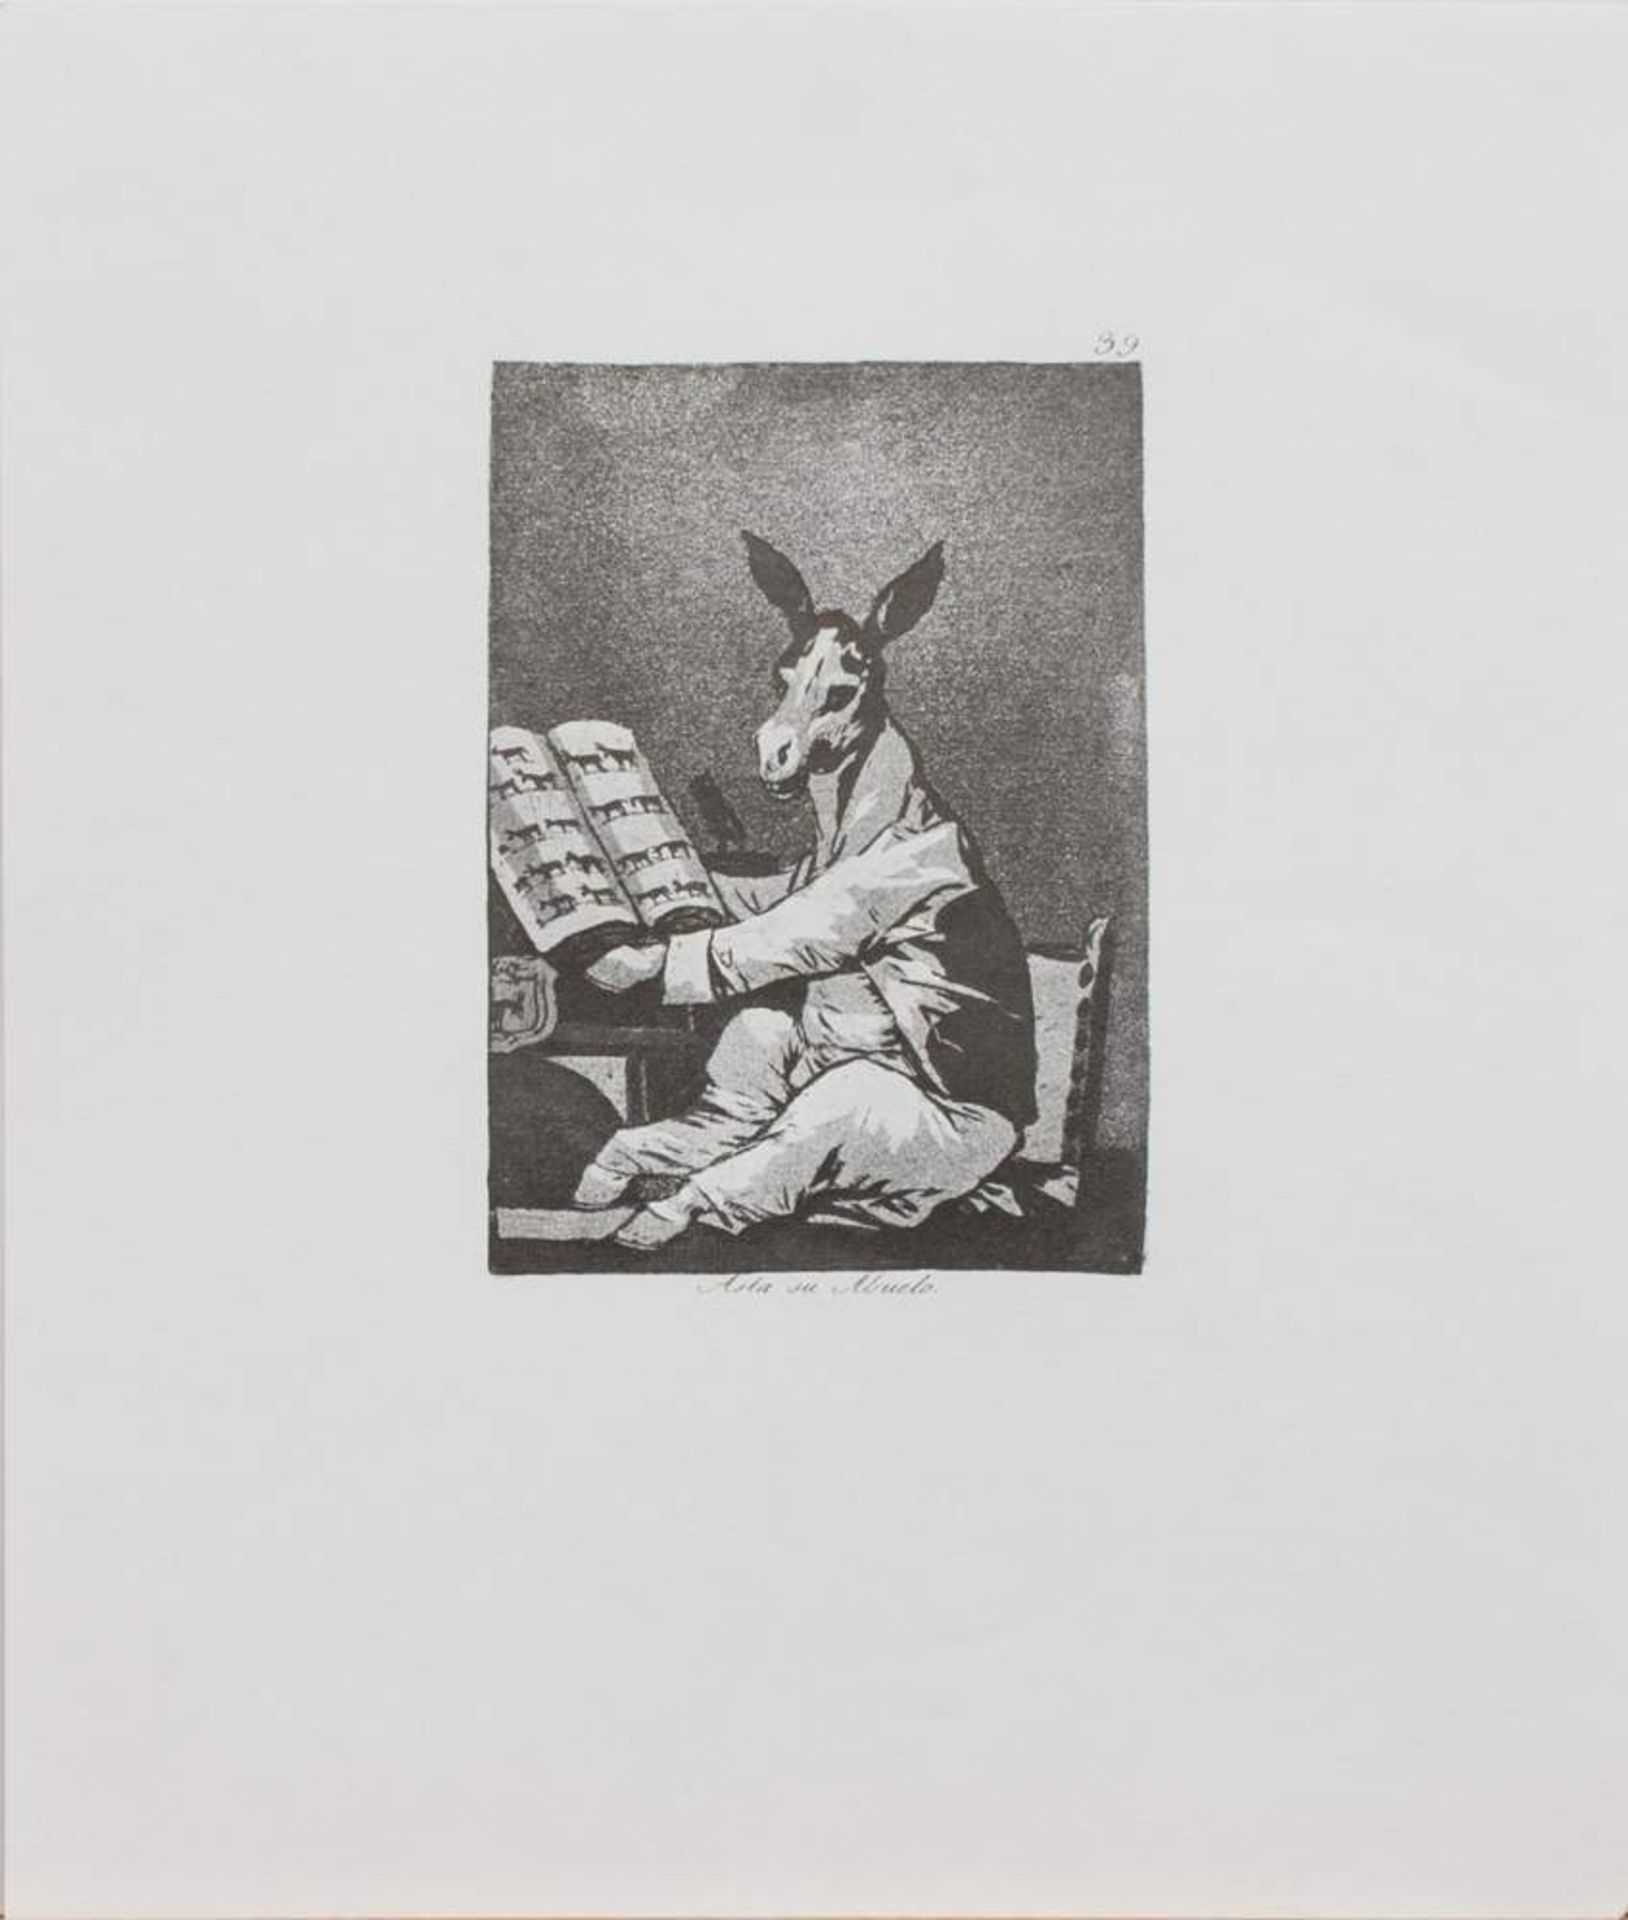 Francisco de Goya (Fuendetodos 1746 - 1828 Bordeaux, spanischer Maler und Grafiker) Asta su